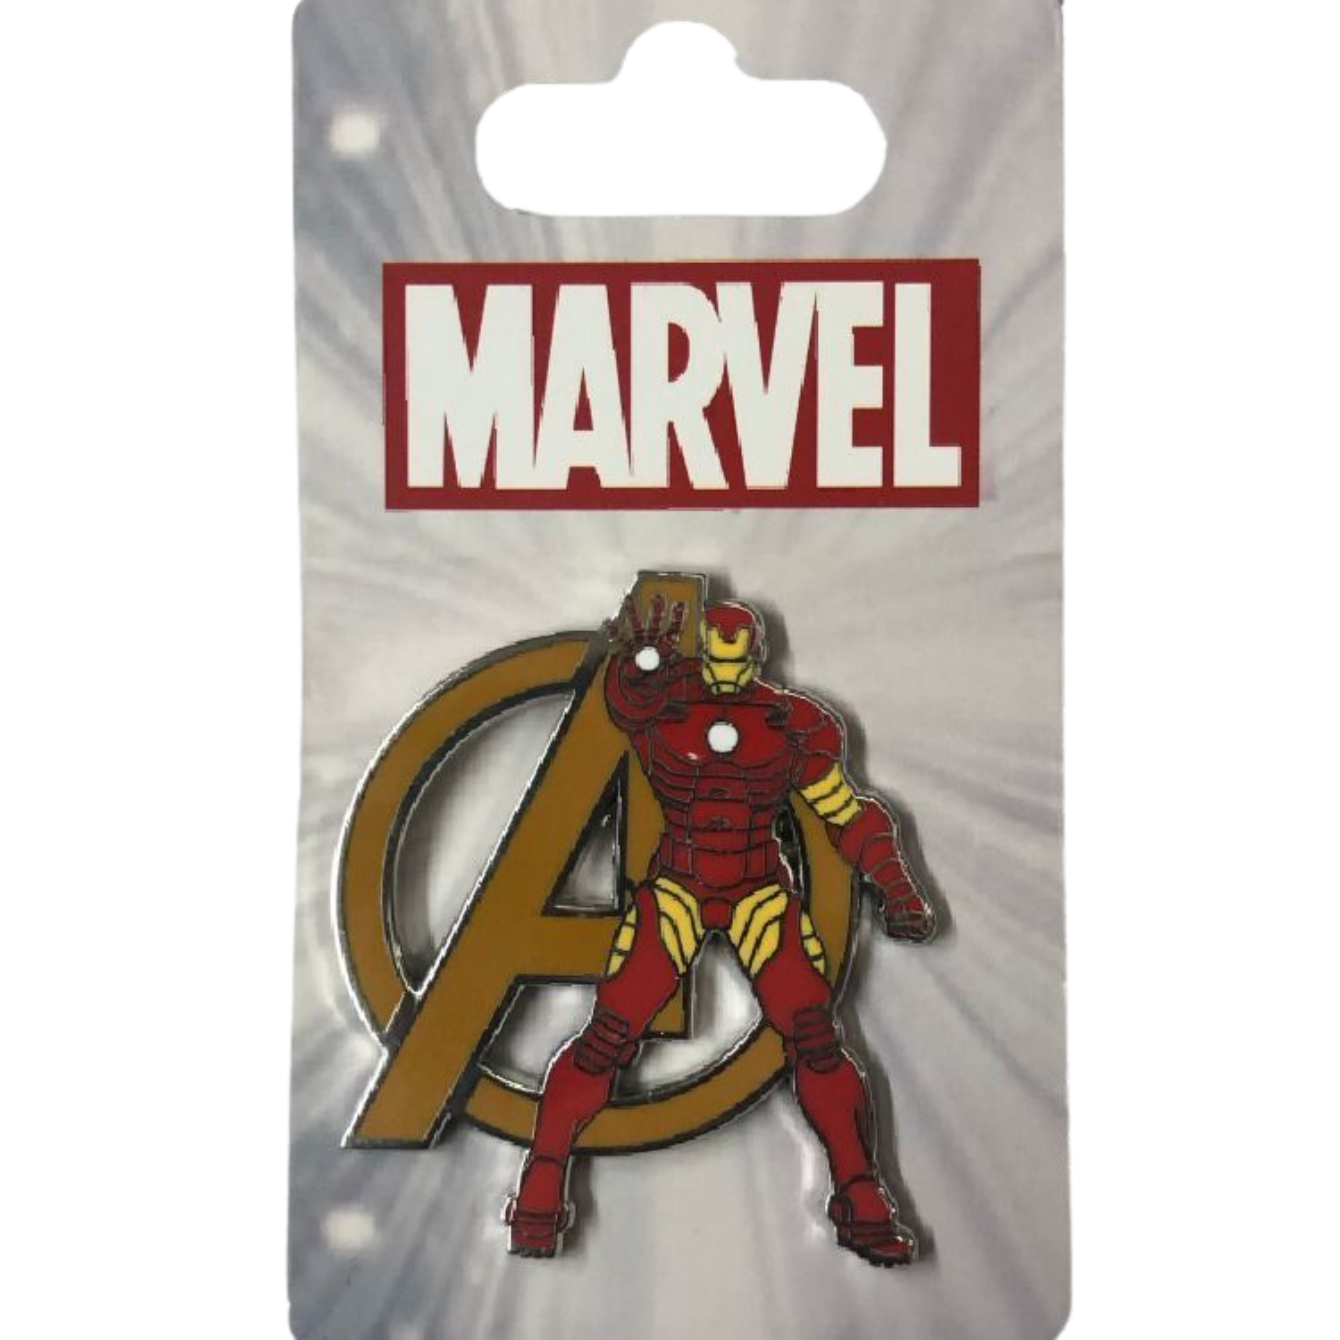 Marvel - Iron Man - Collector Pin